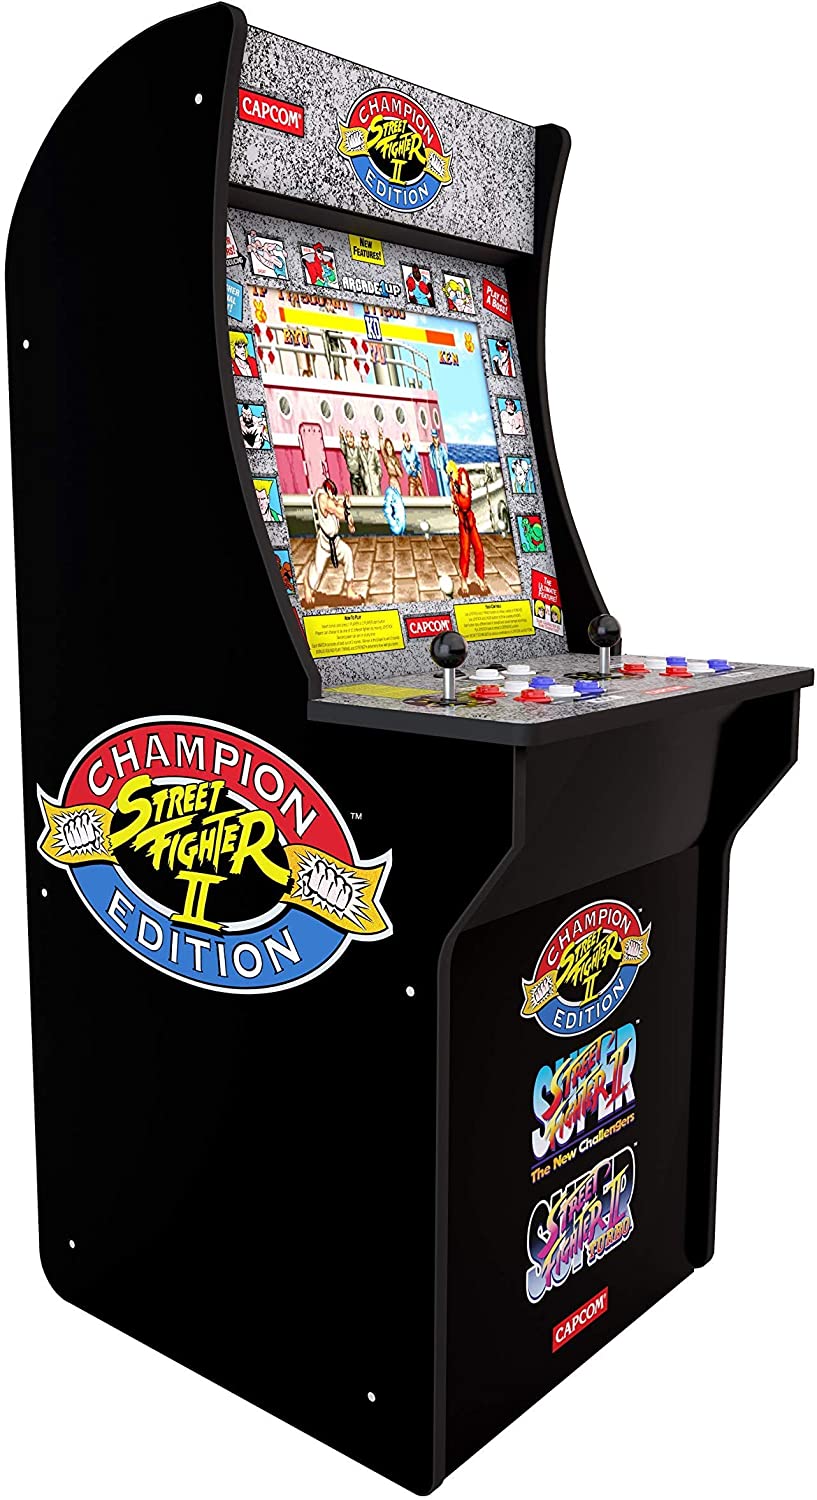 StreetFighter - Promo sur la borne arcade Street Fighter chez Amazon ! 81tdnu10